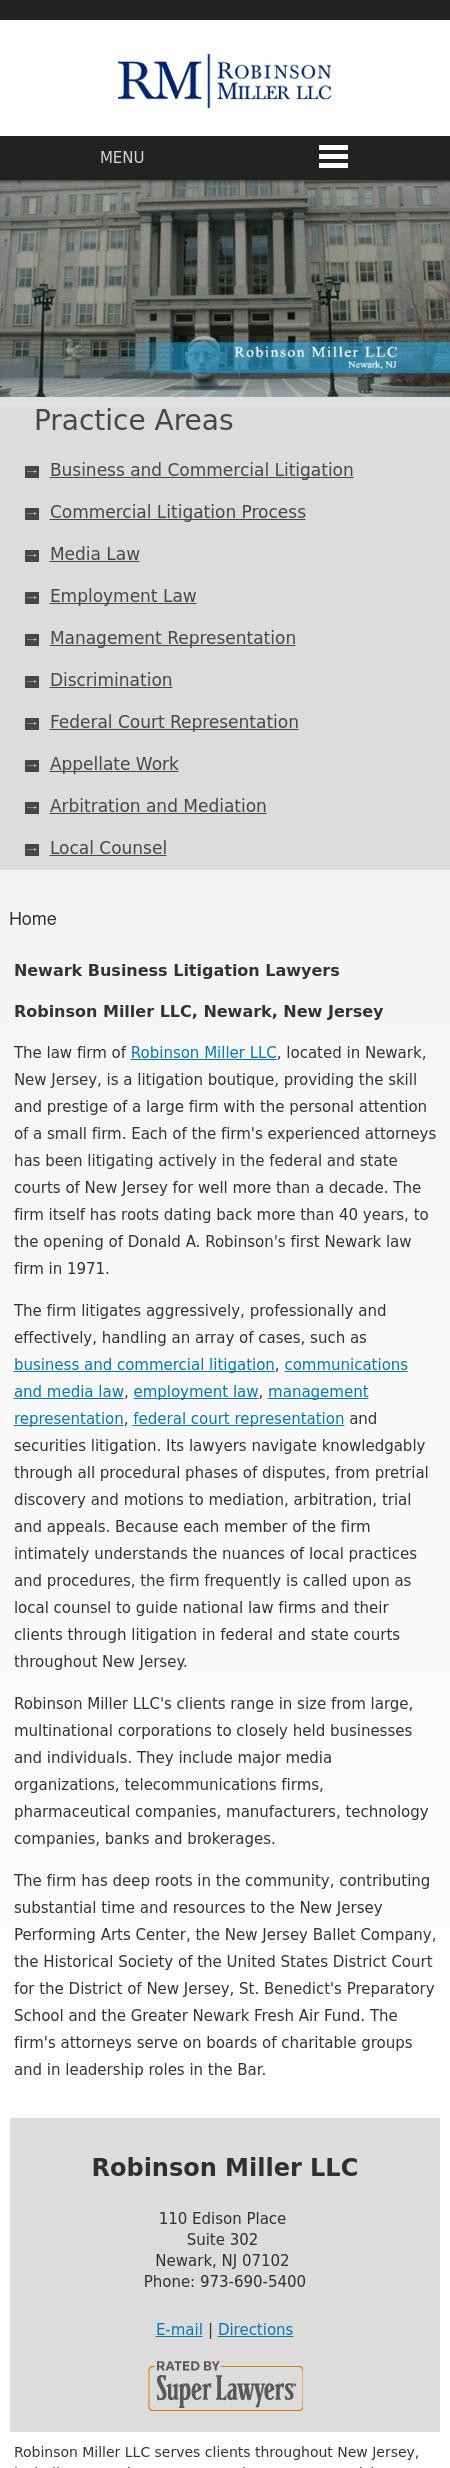 Robinson Miller LLC - Newark NJ Lawyers